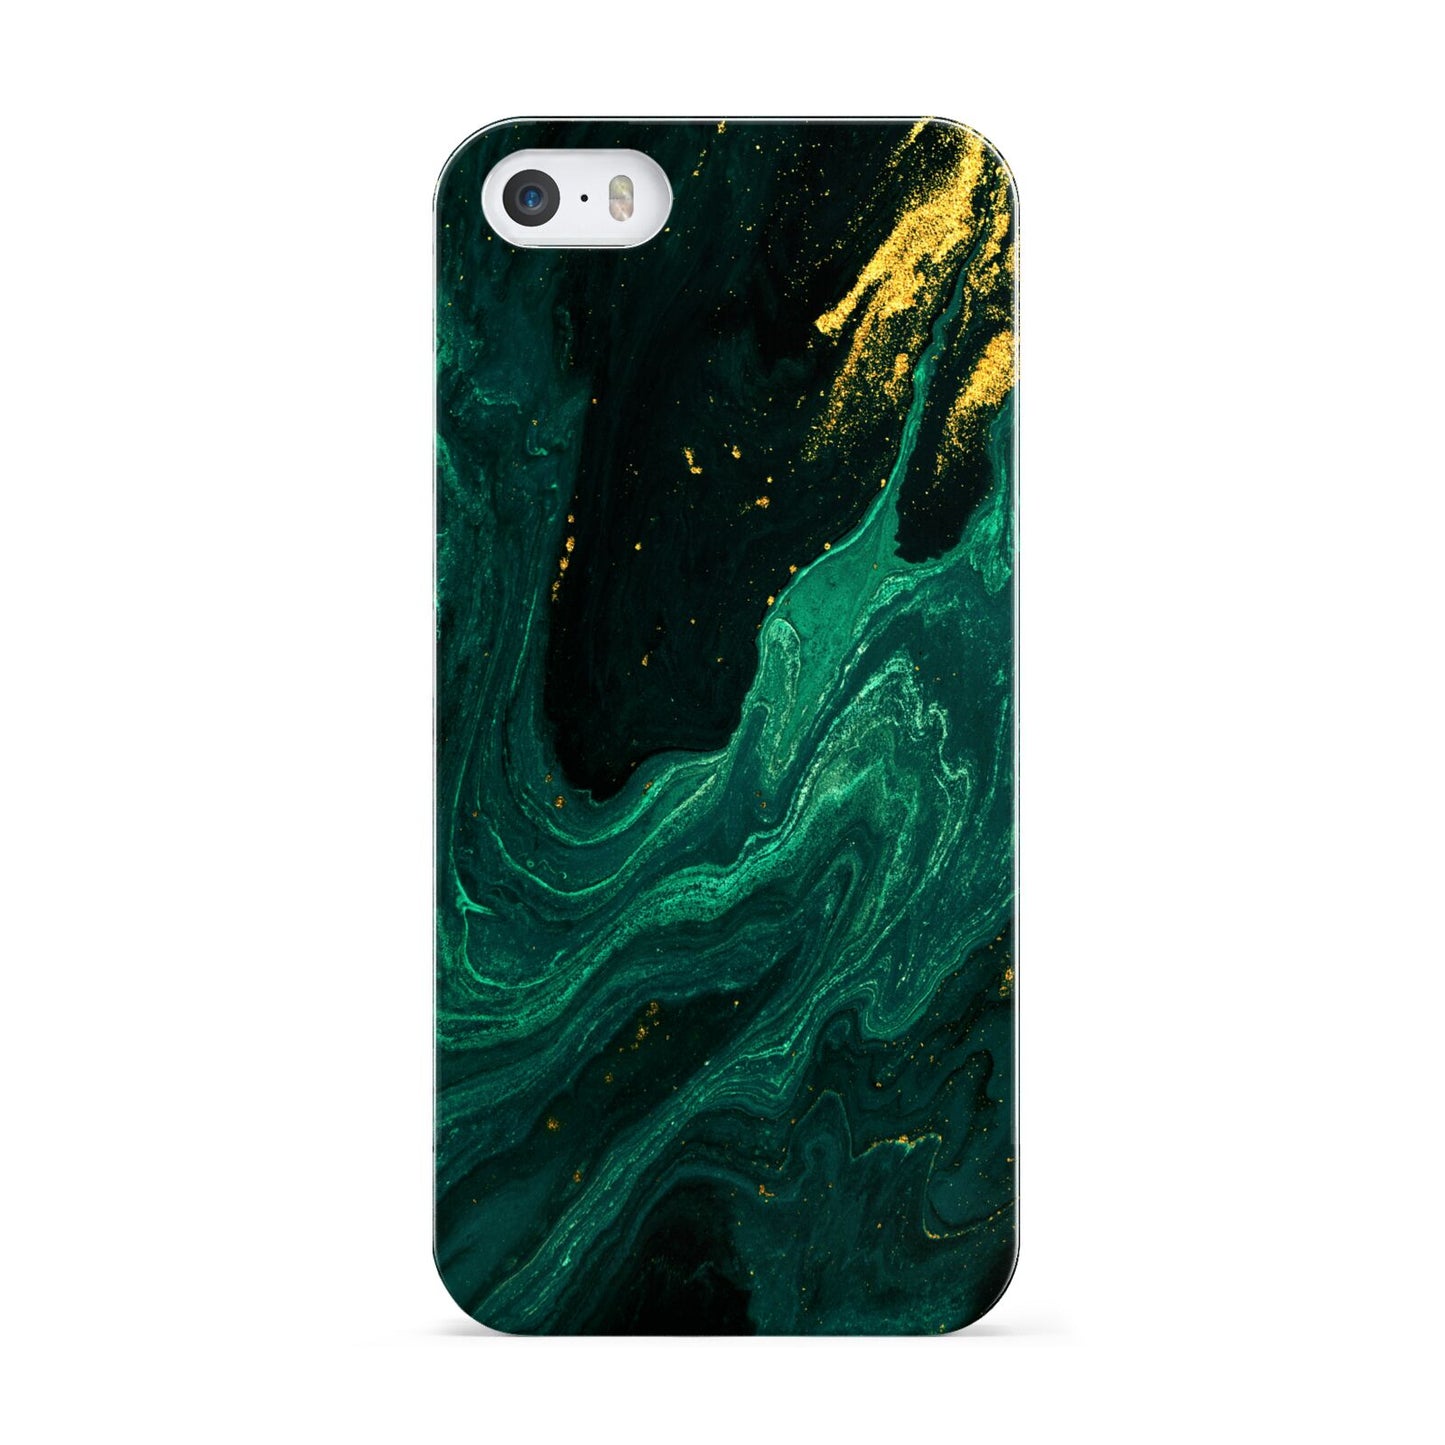 Emerald Green Apple iPhone 5 Case